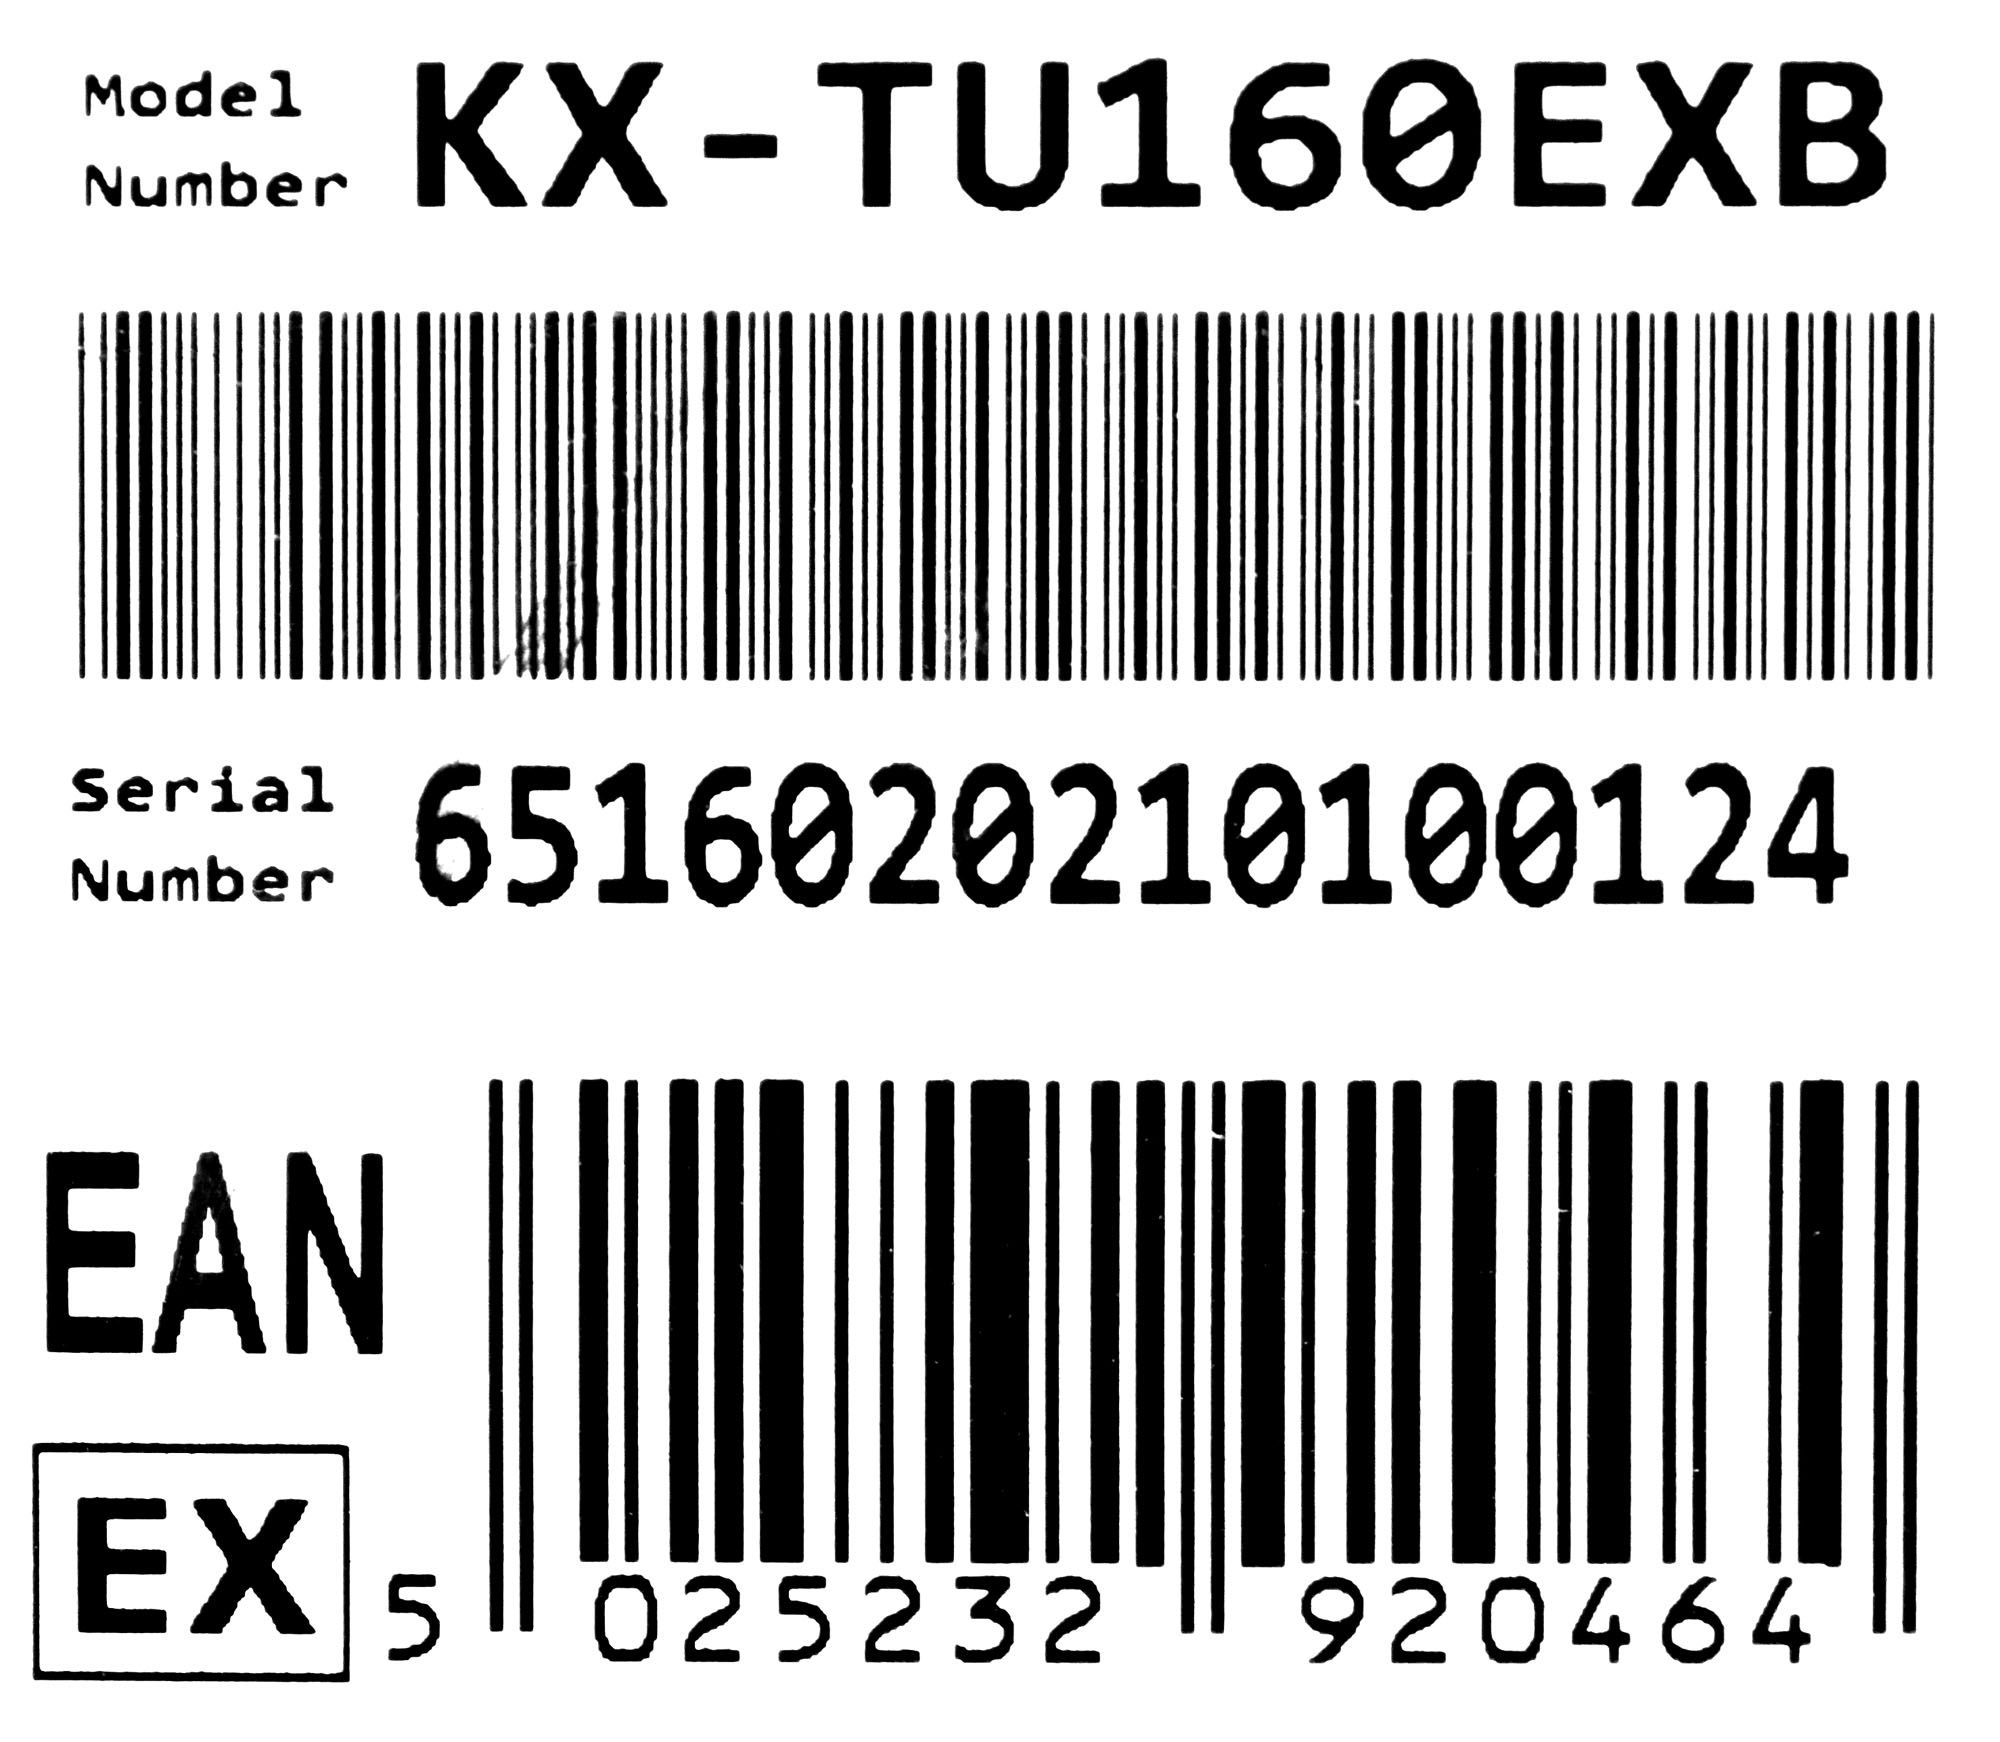 MOBILE PHONE PANASONIC KX-TU160EXB BLACK_3